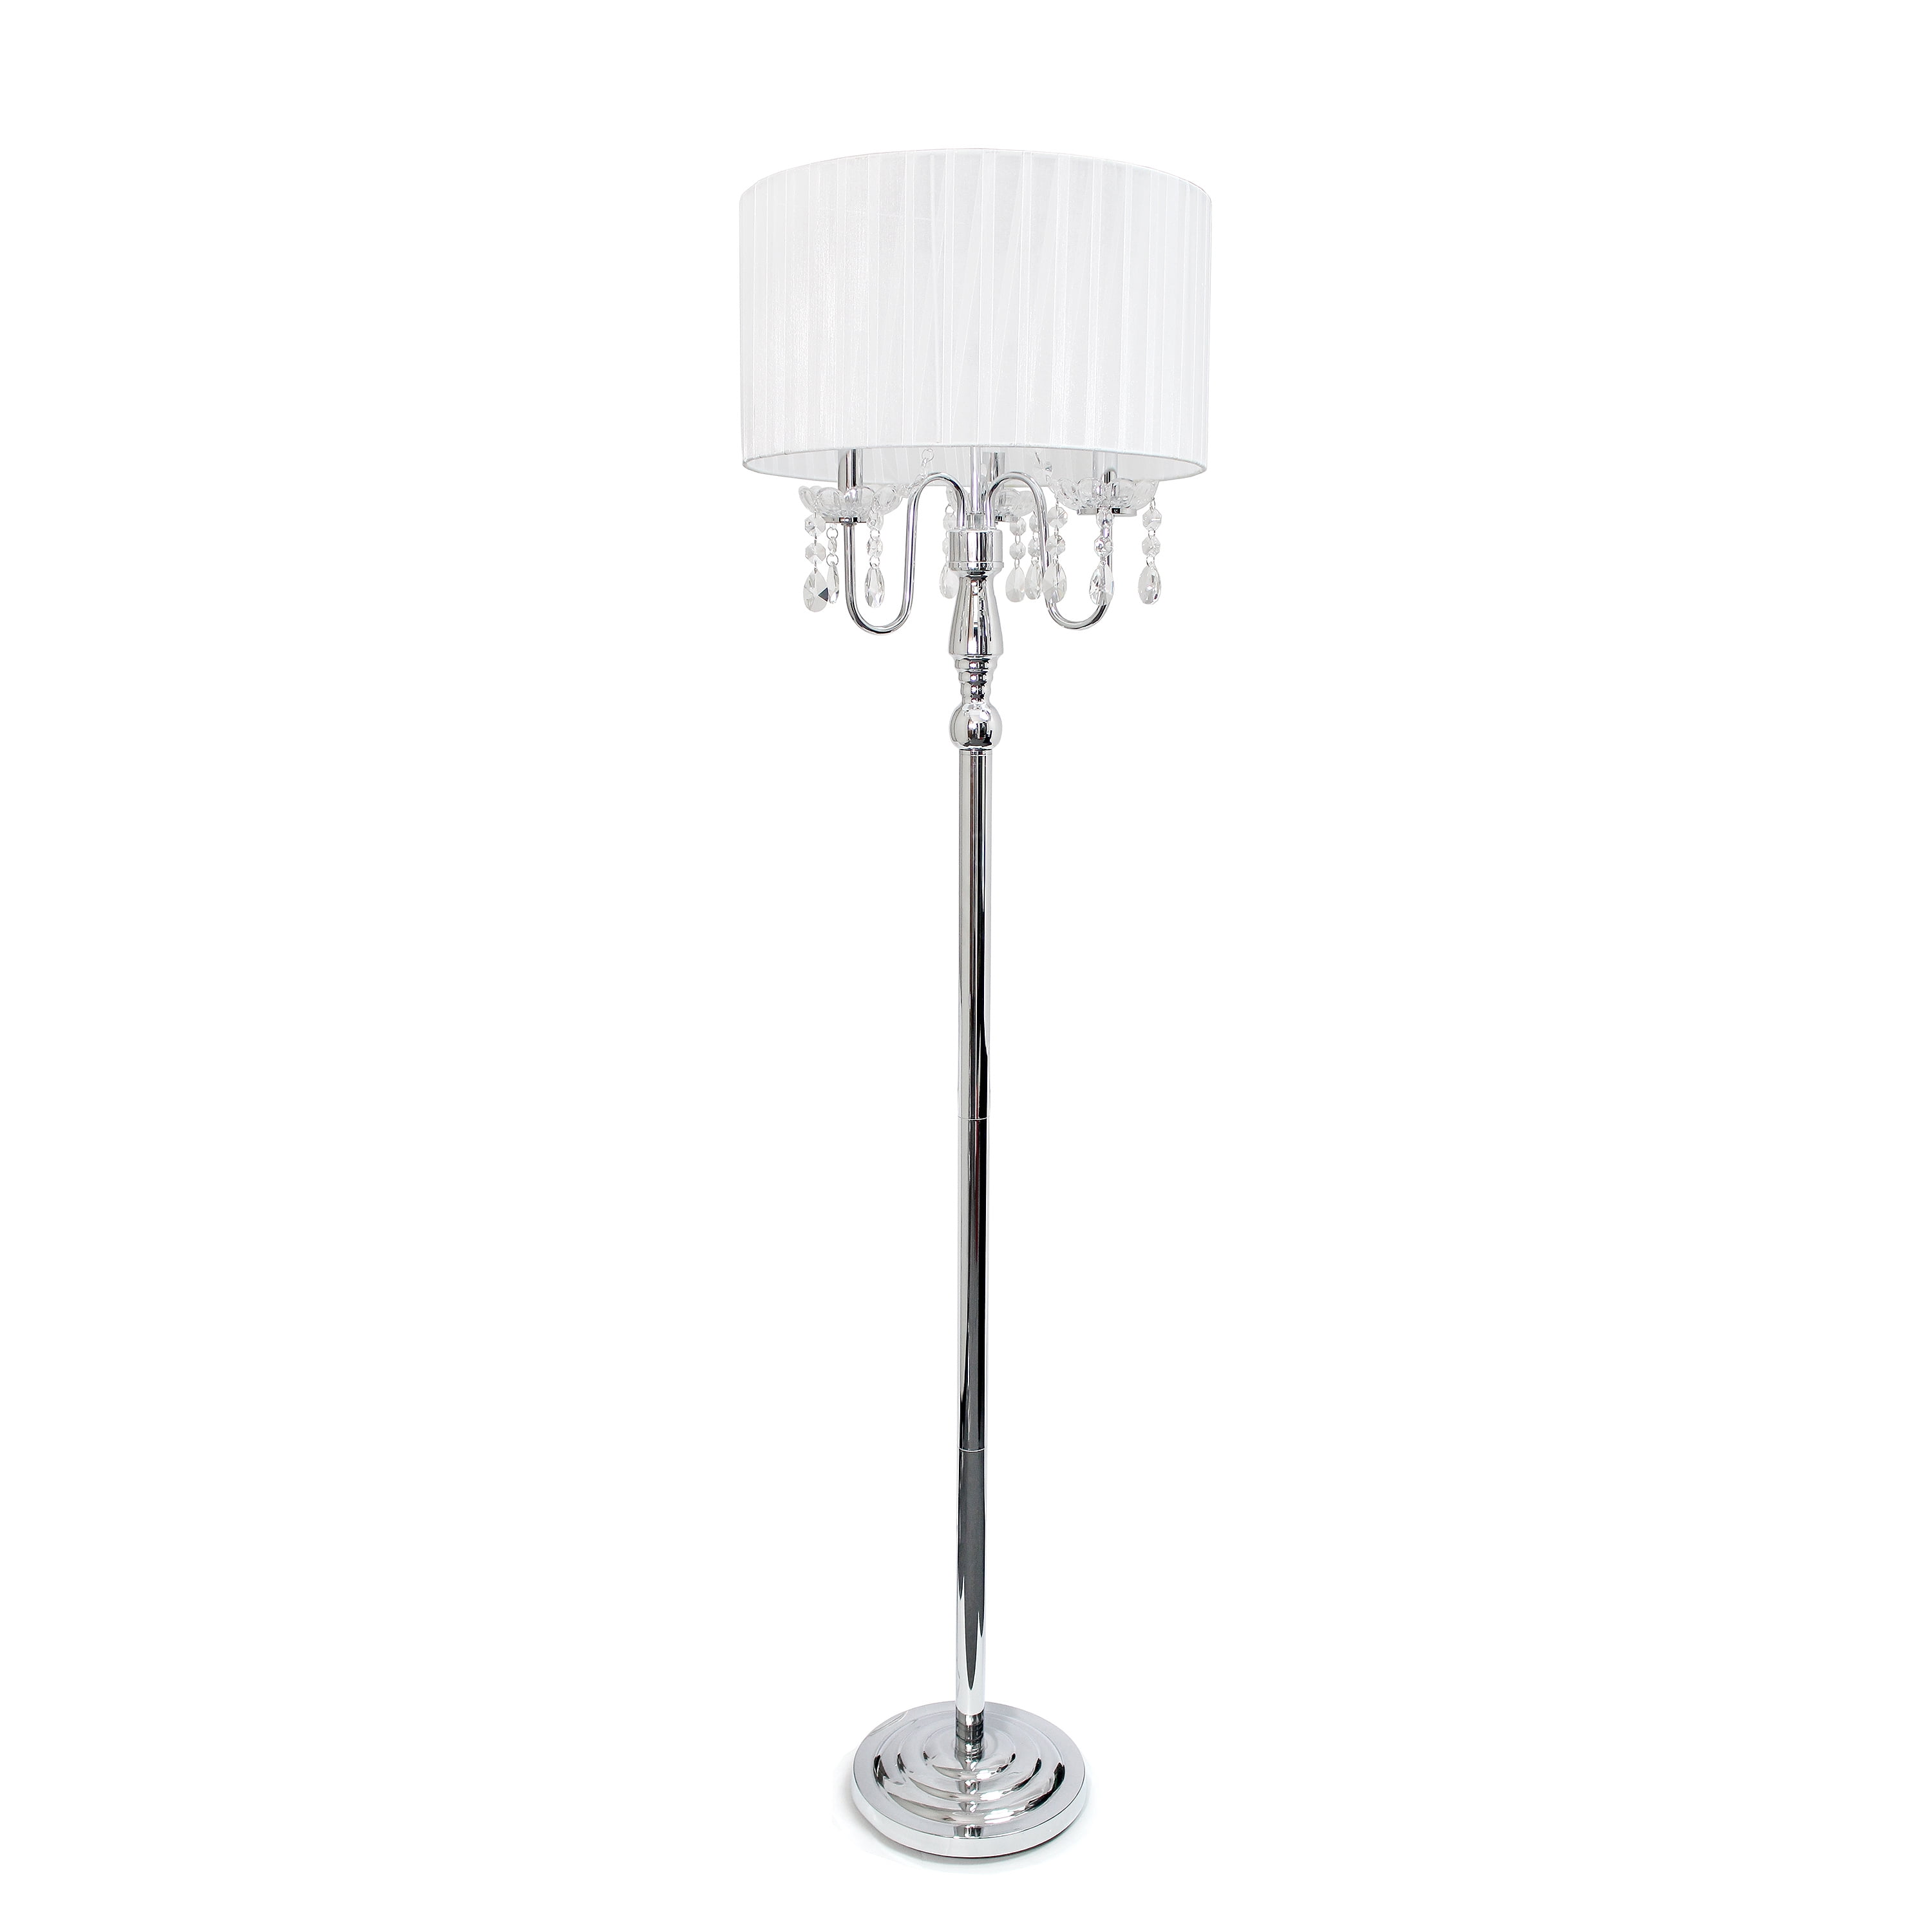 Sheer Shade Floor Lamp, Table Lamp Shade With Crystal Droplets